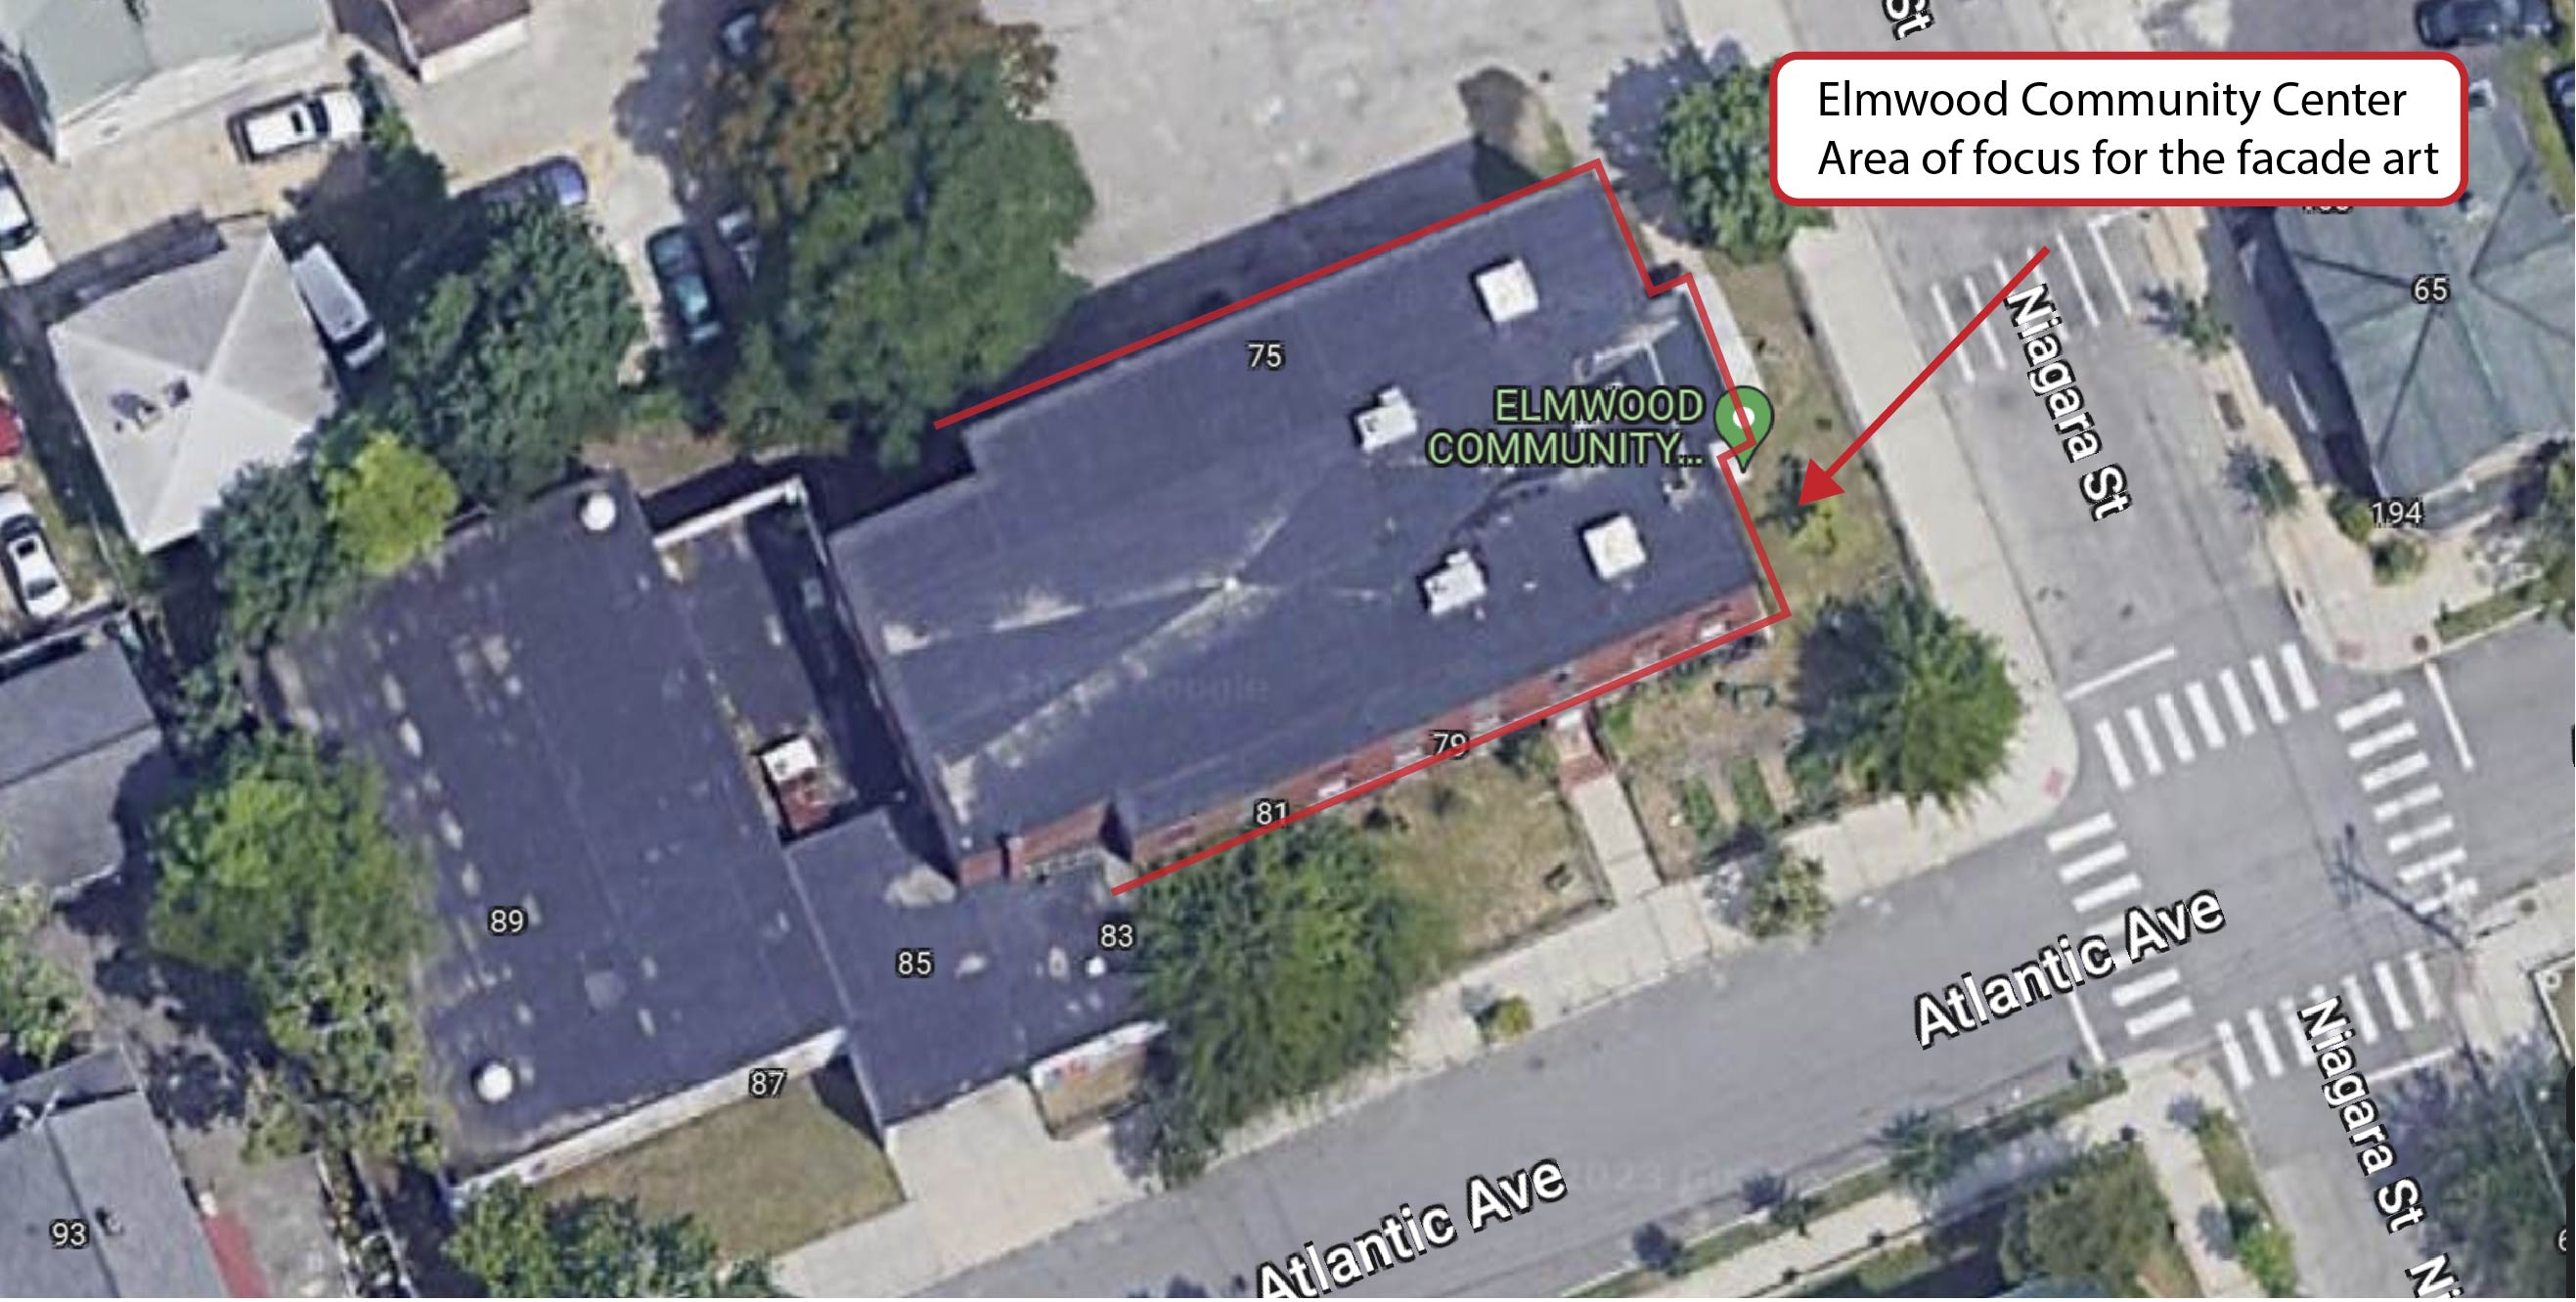 Aerial View of Elmwood Community Center